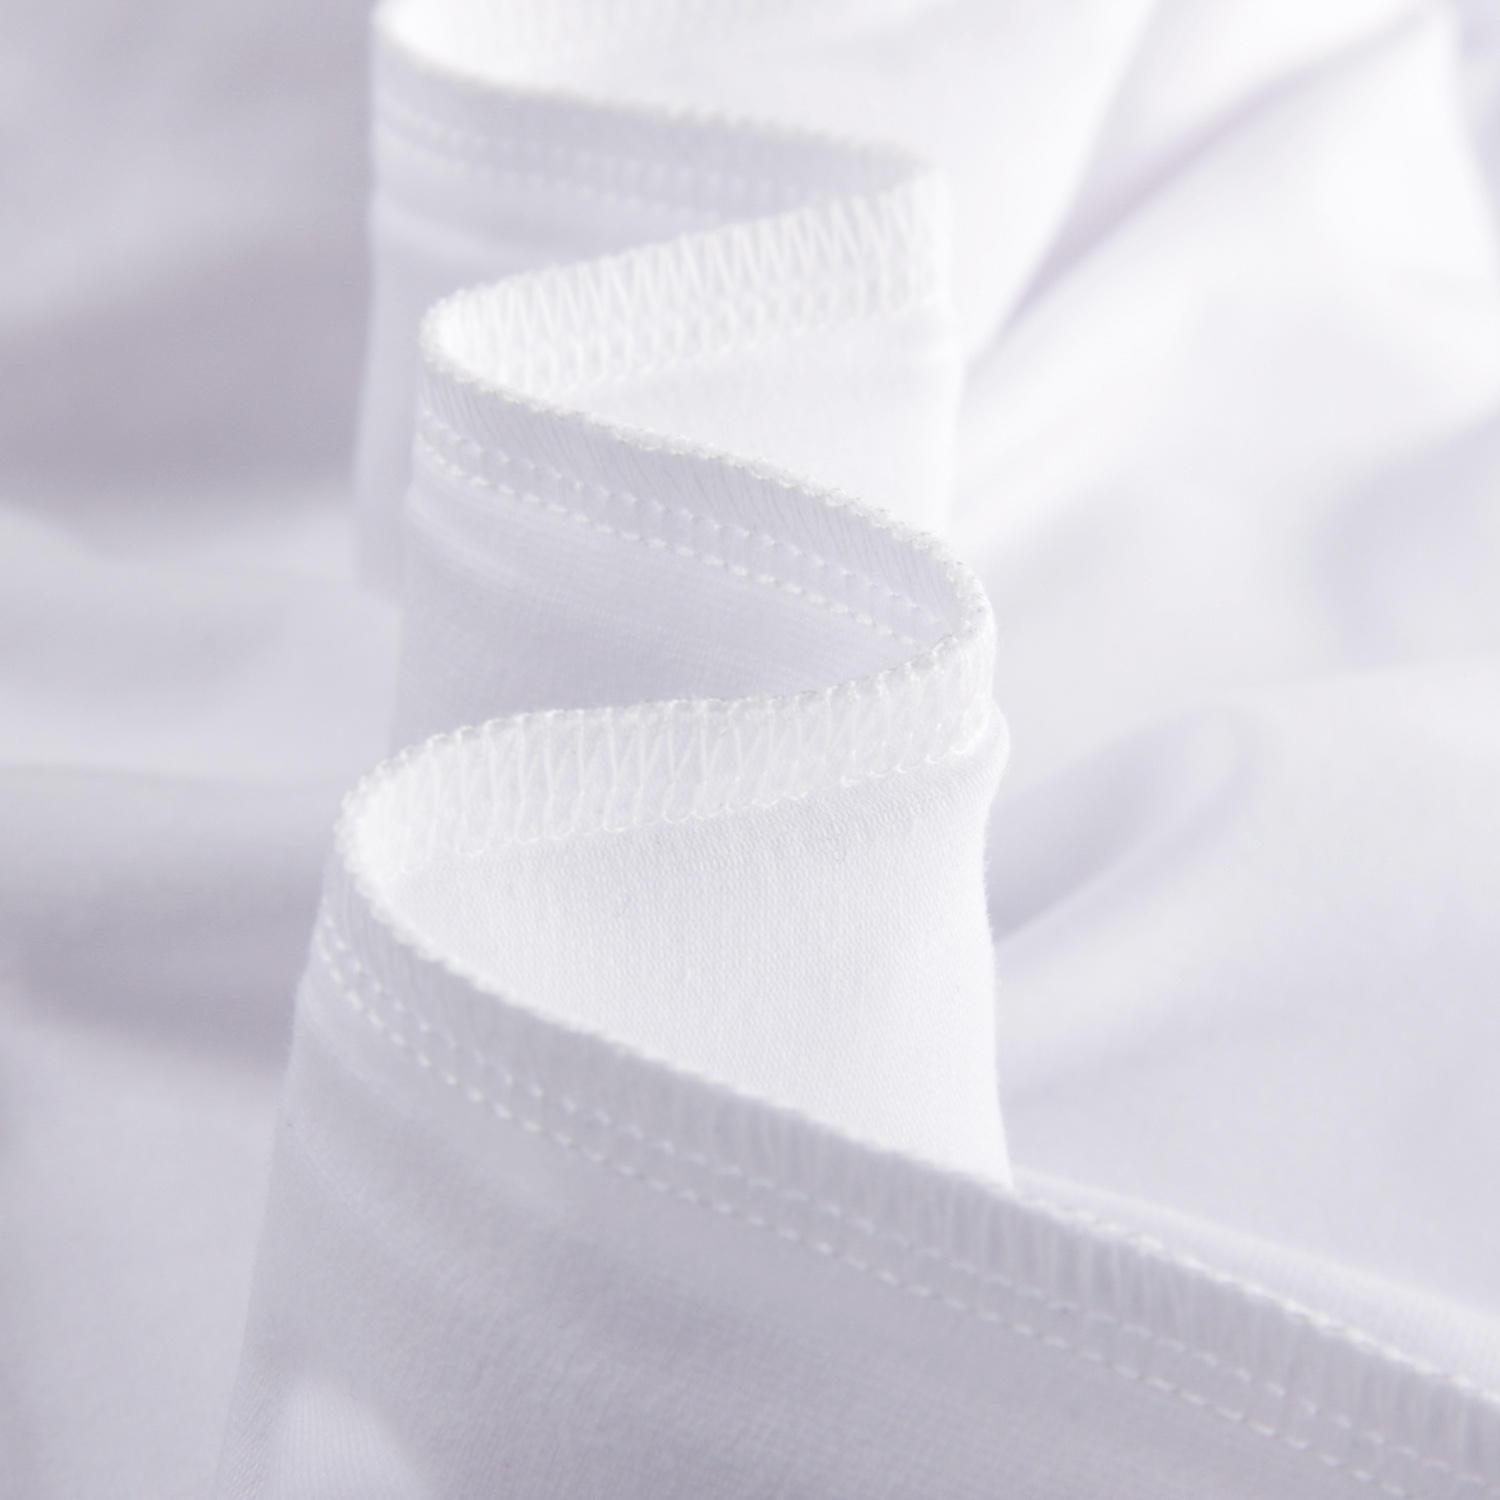 Brand Quality Manufacture Custom Design Logo Printing Striped Sleeve Tshirt Spandex Cotton White T Shirt For Men Stylish